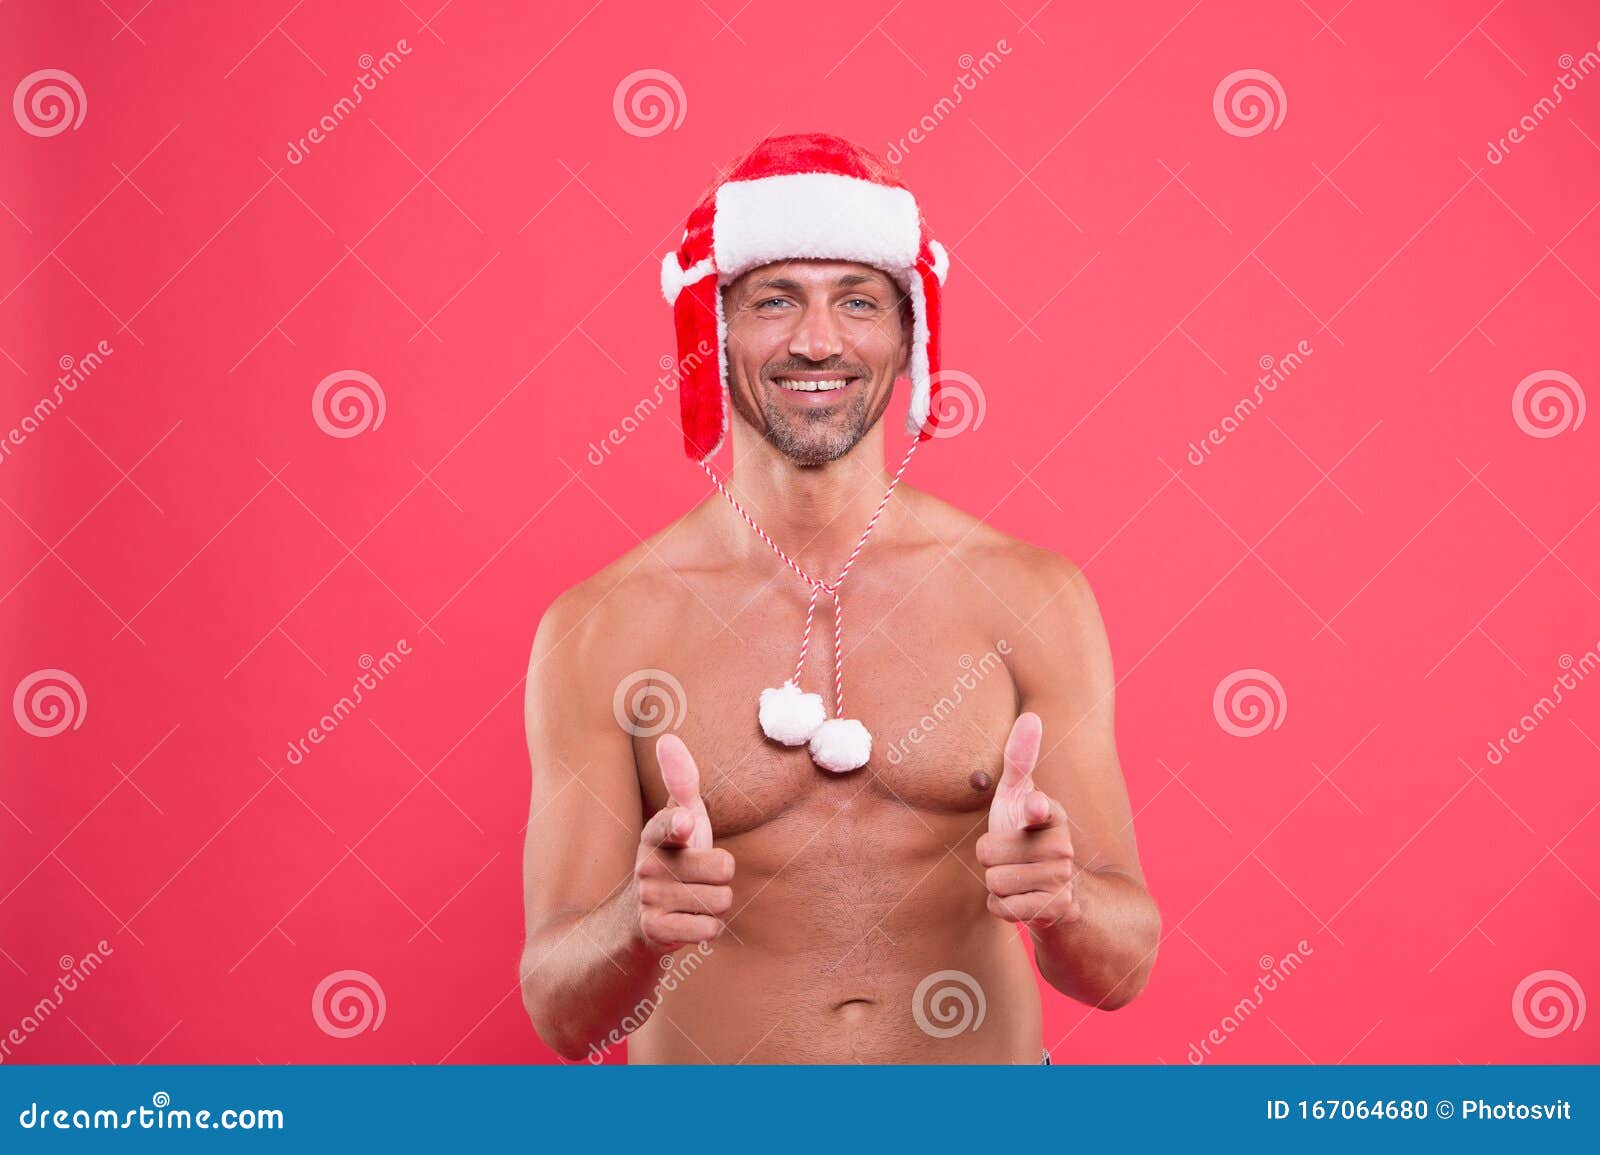 333 Happy Naked Christmas Guy Stock Photos